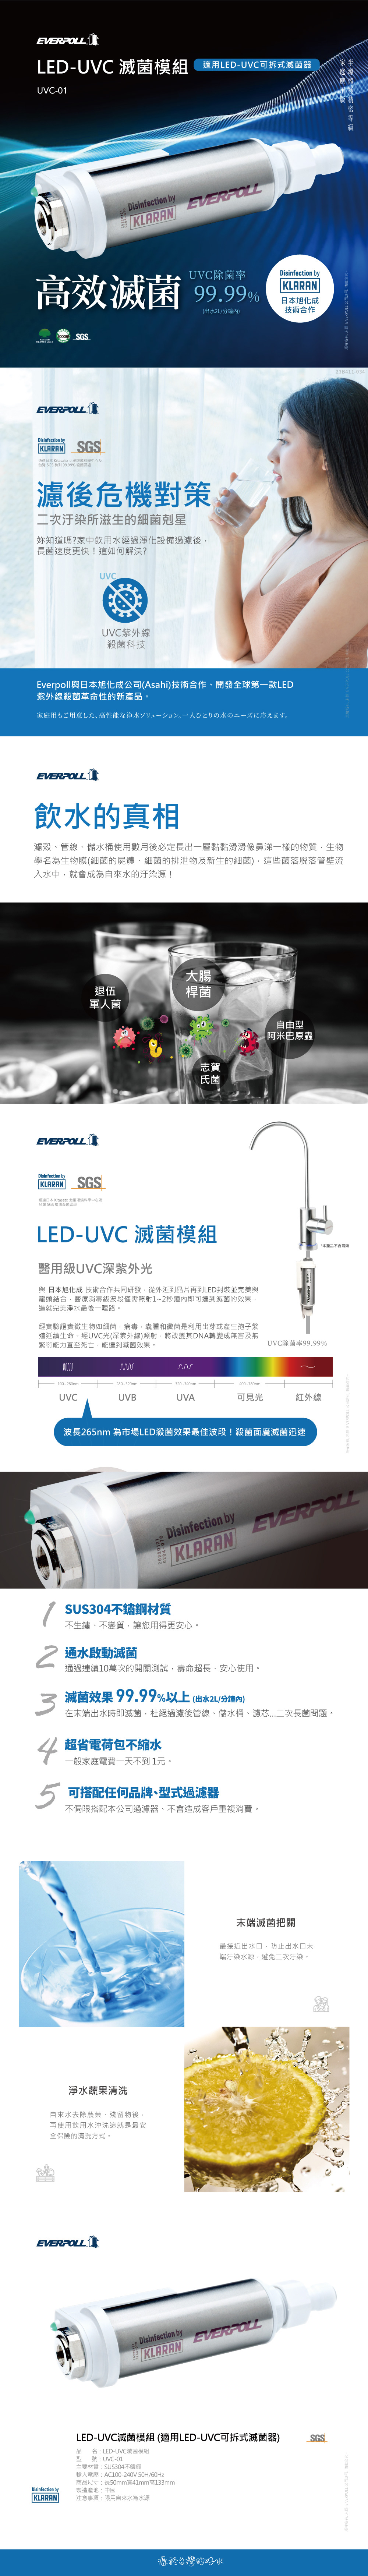 UVC-903LED滅菌模組.jpg